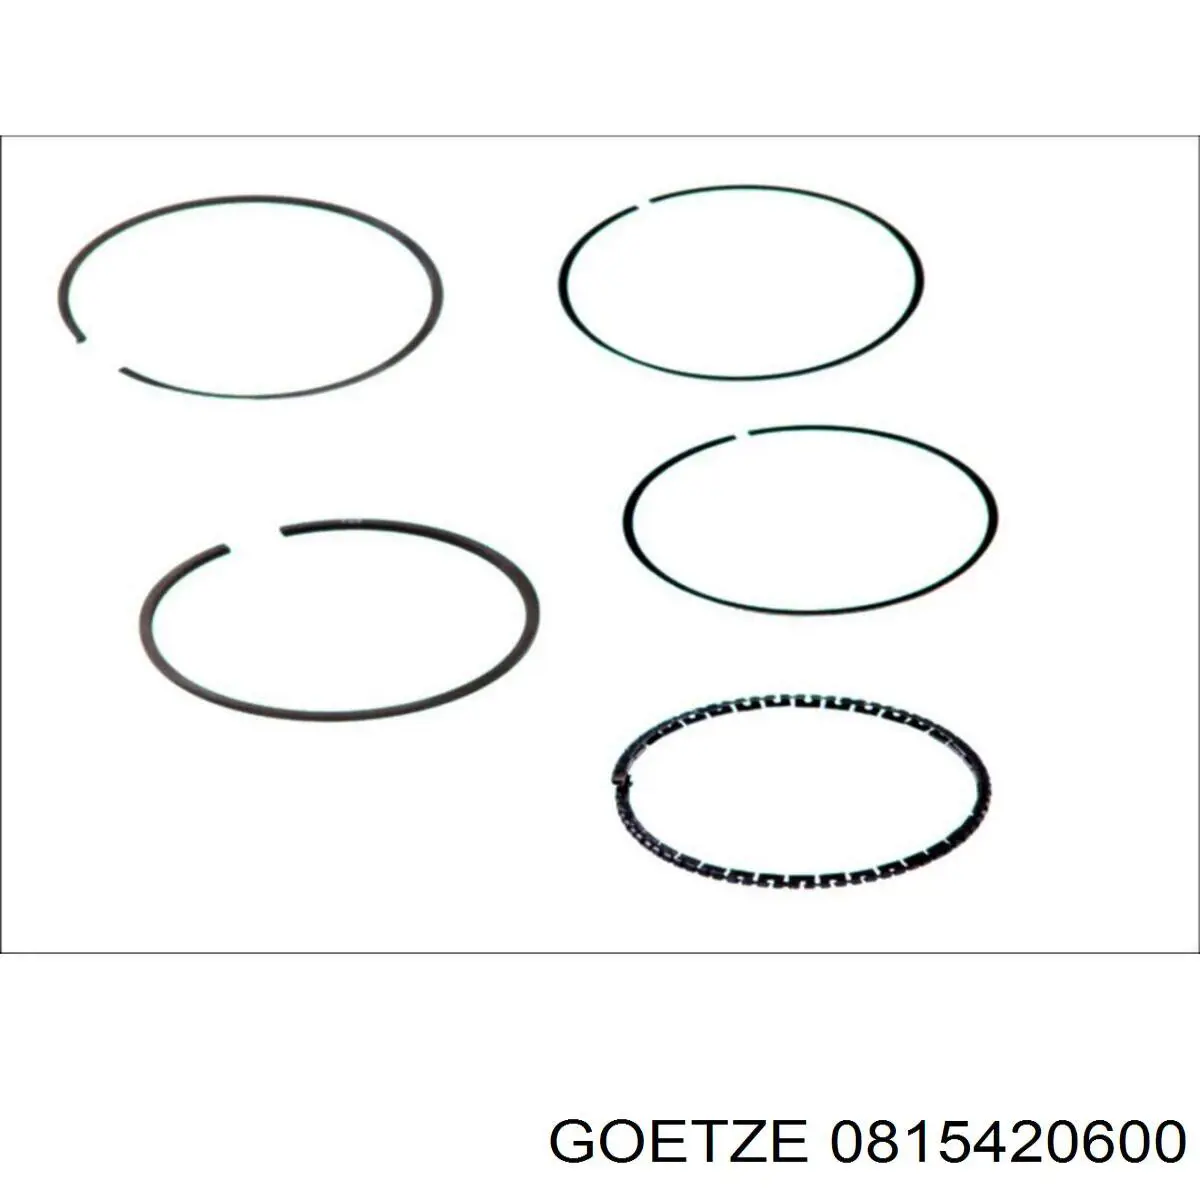 Кольца поршневые на 1 цилиндр, 2-й ремонт (+0,50) на Citroen AX ZA